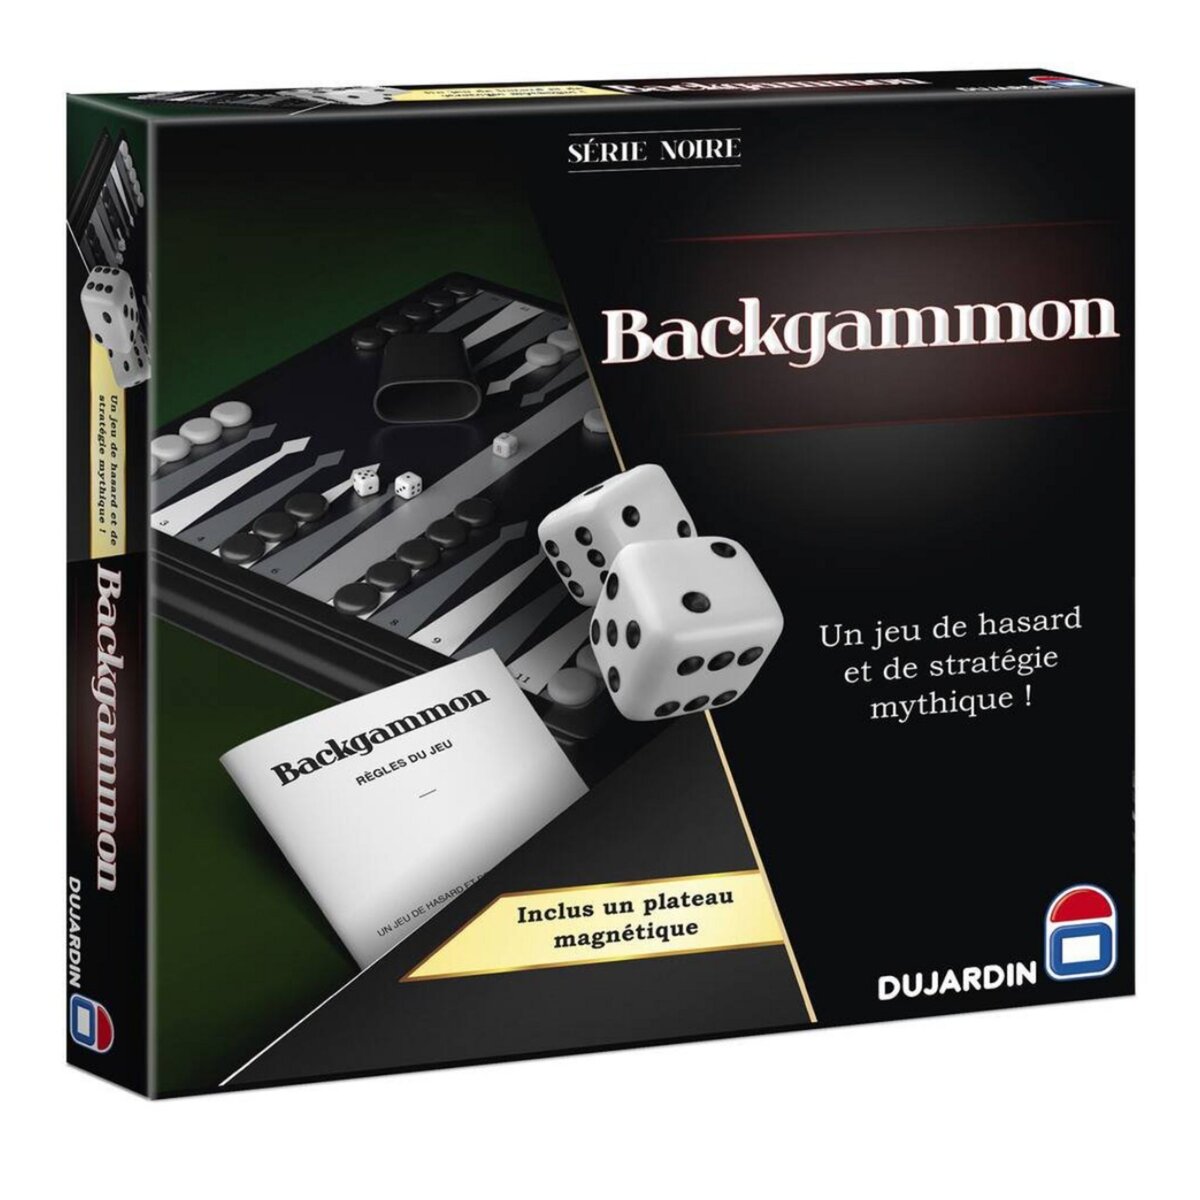 DUJARDIN Jeu - Série noire backgammon